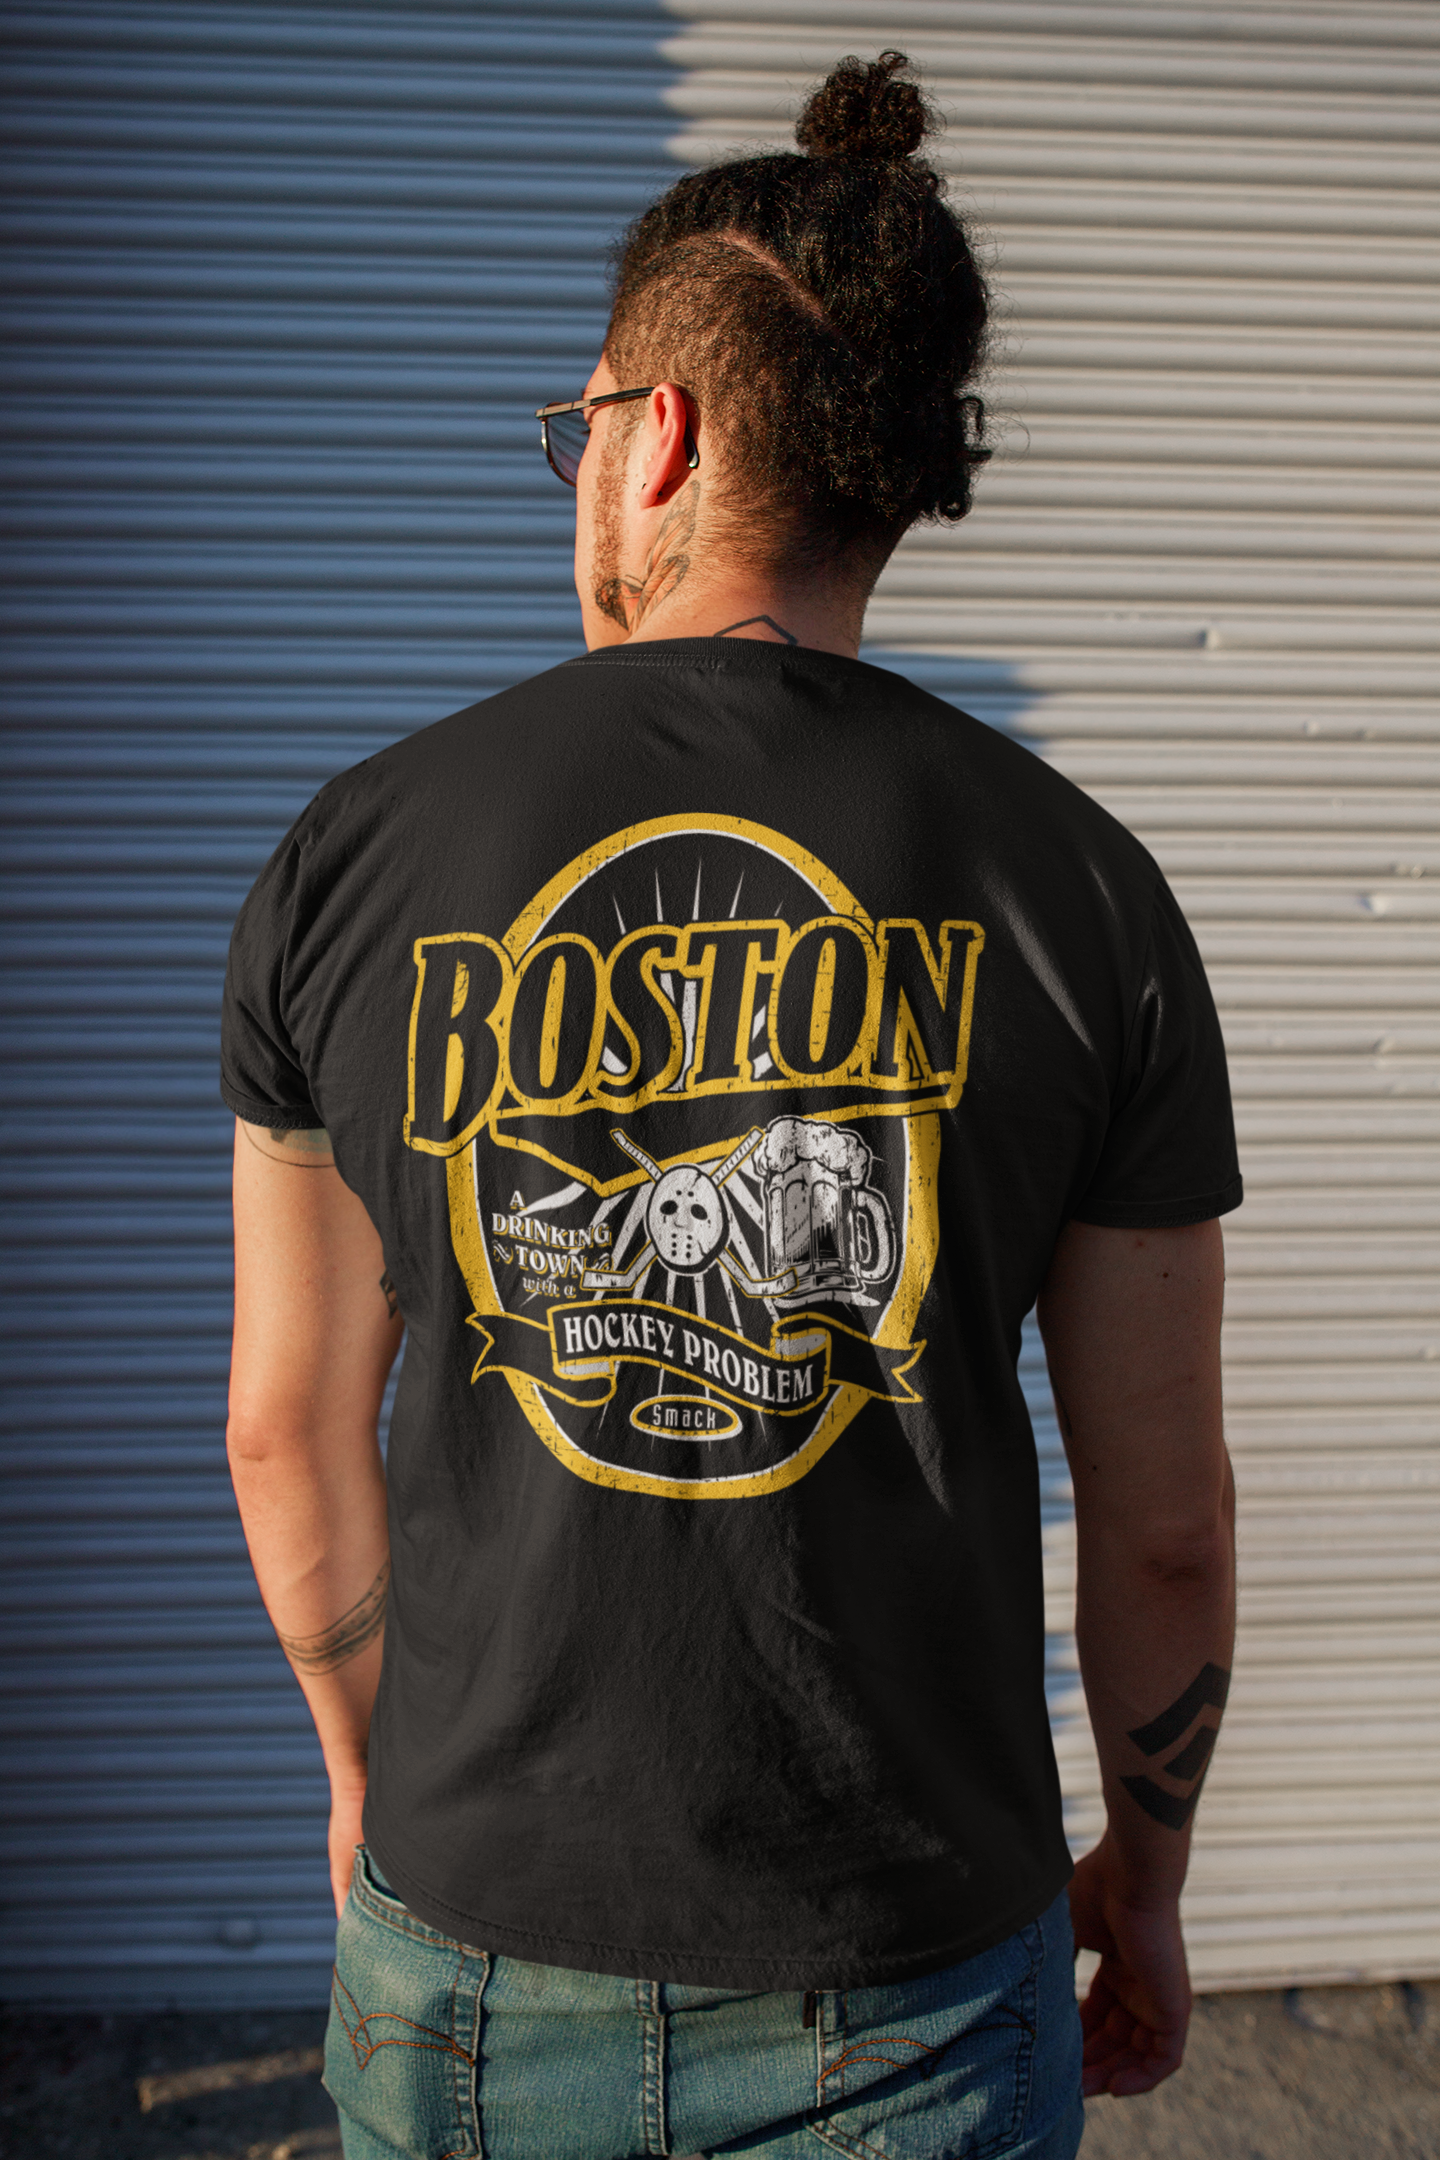 Smack Apparel Bear Down Boston Shirt Long Sleeve / Small / Black